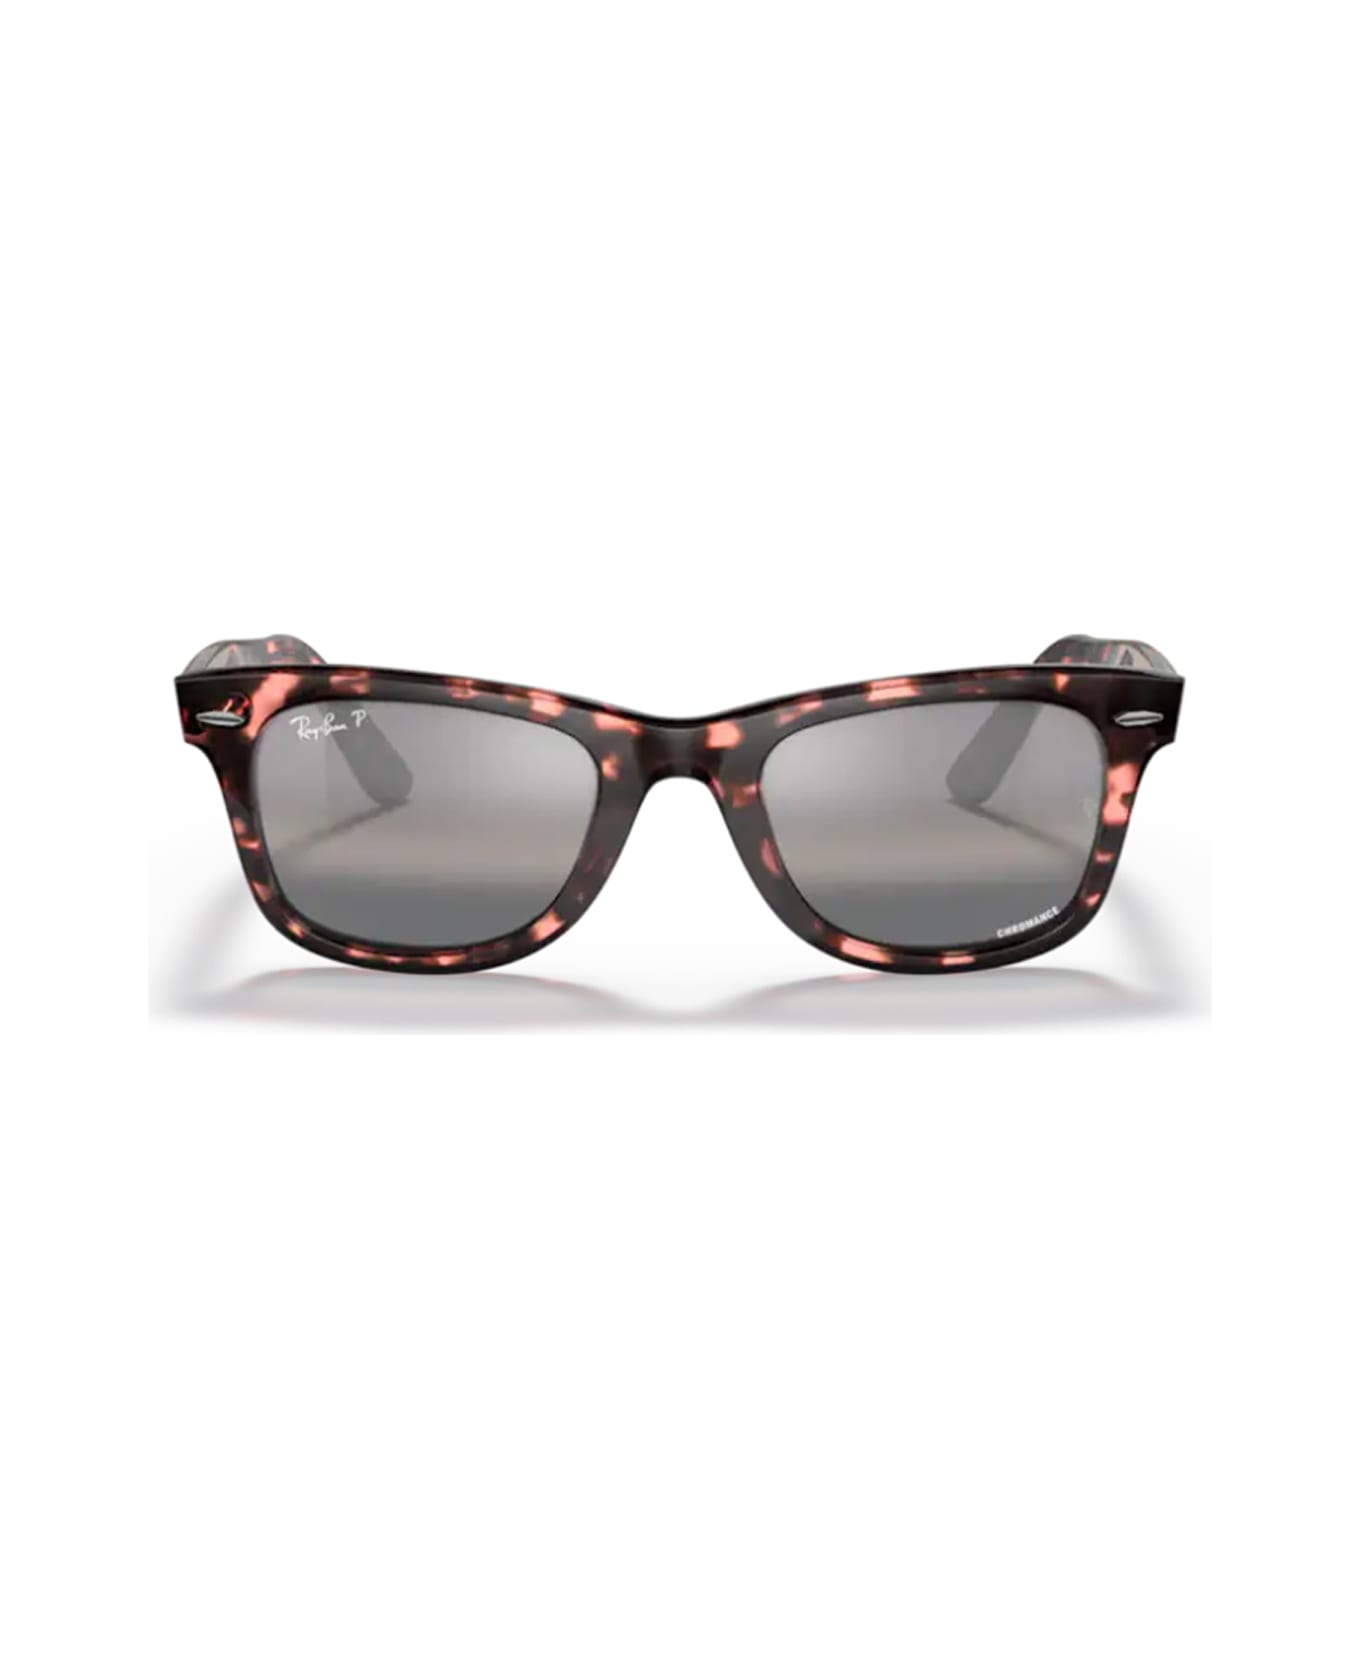 Ray-Ban Rb2140 Wayfarer Sunglasses - Rosa サングラス